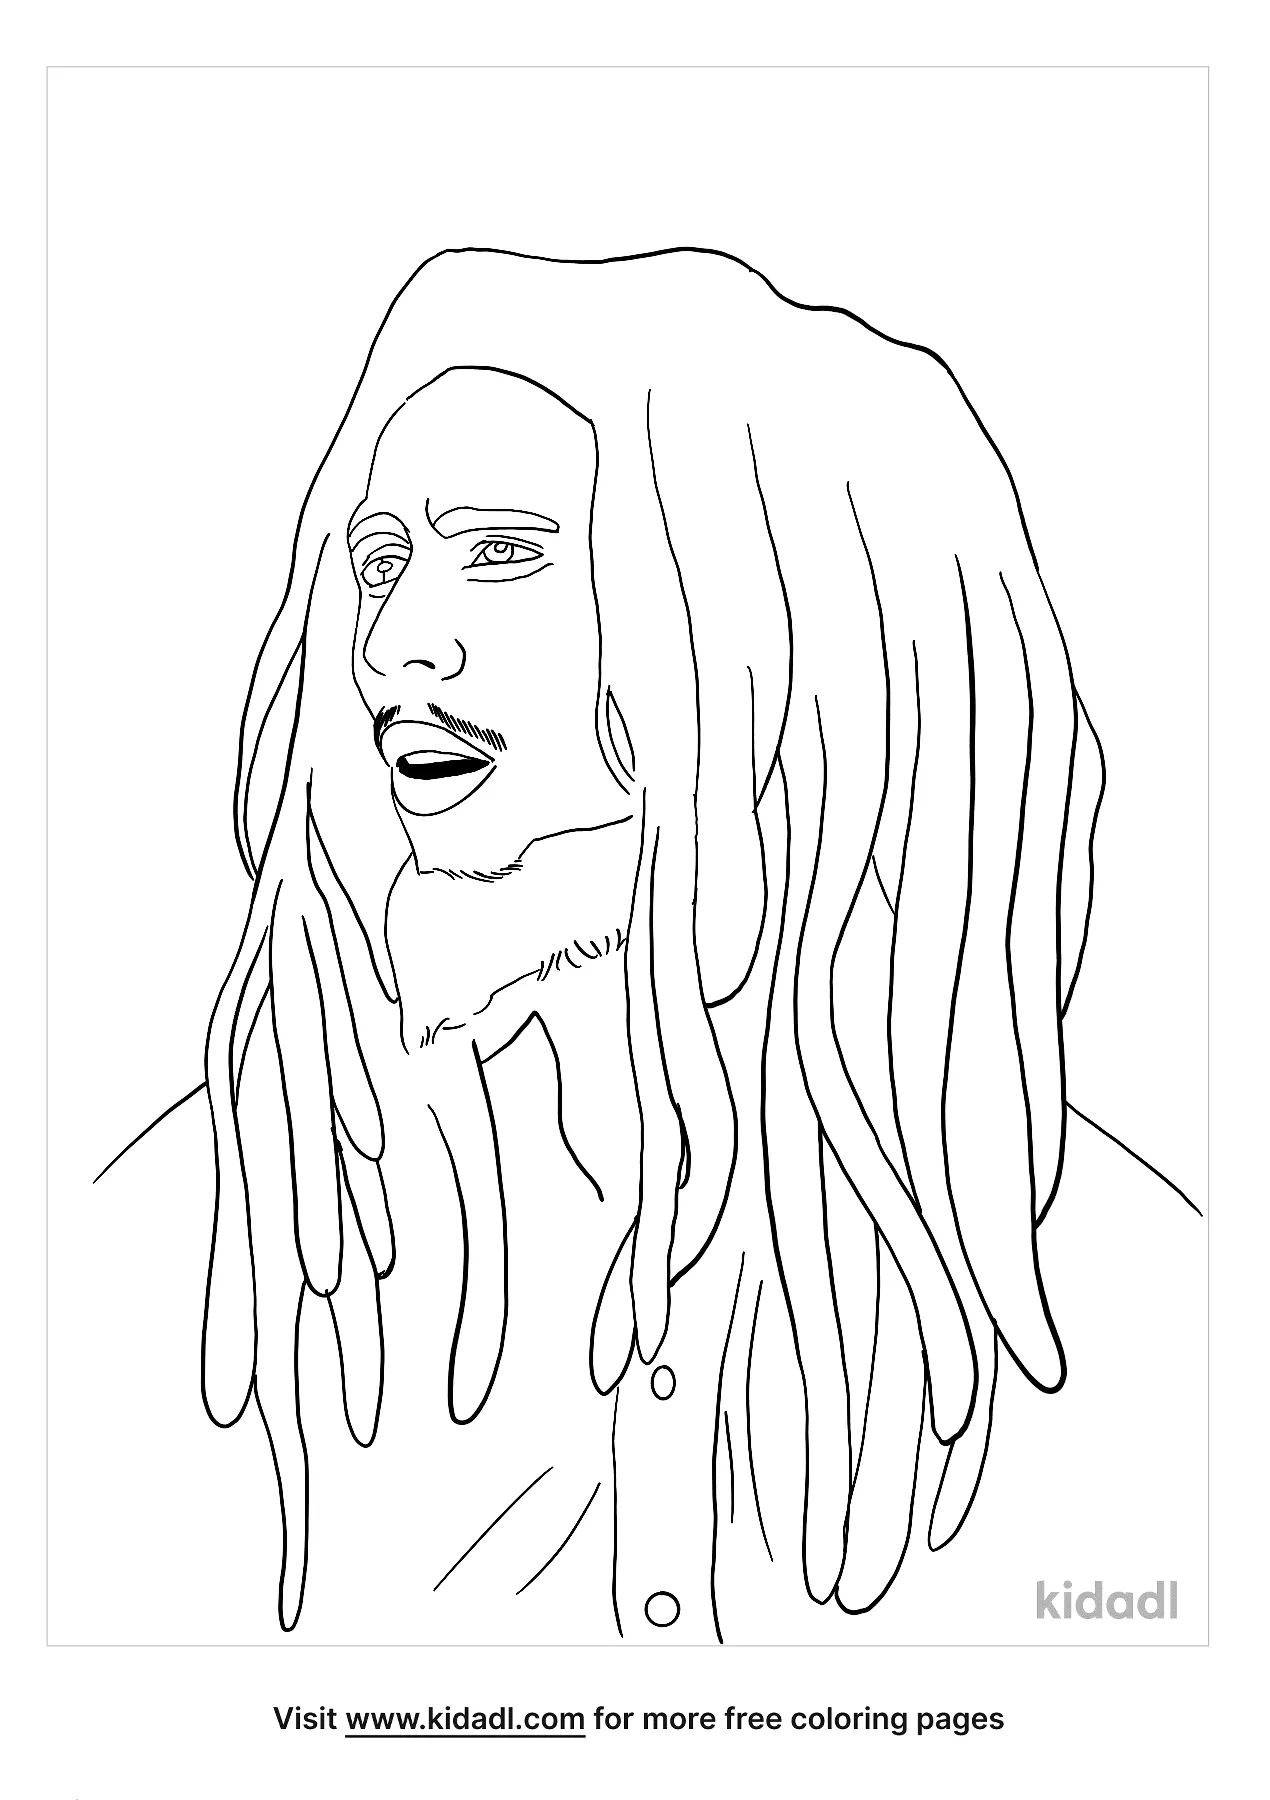 Free Bob Marley Coloring Page | Coloring Page Printables | Kidadl